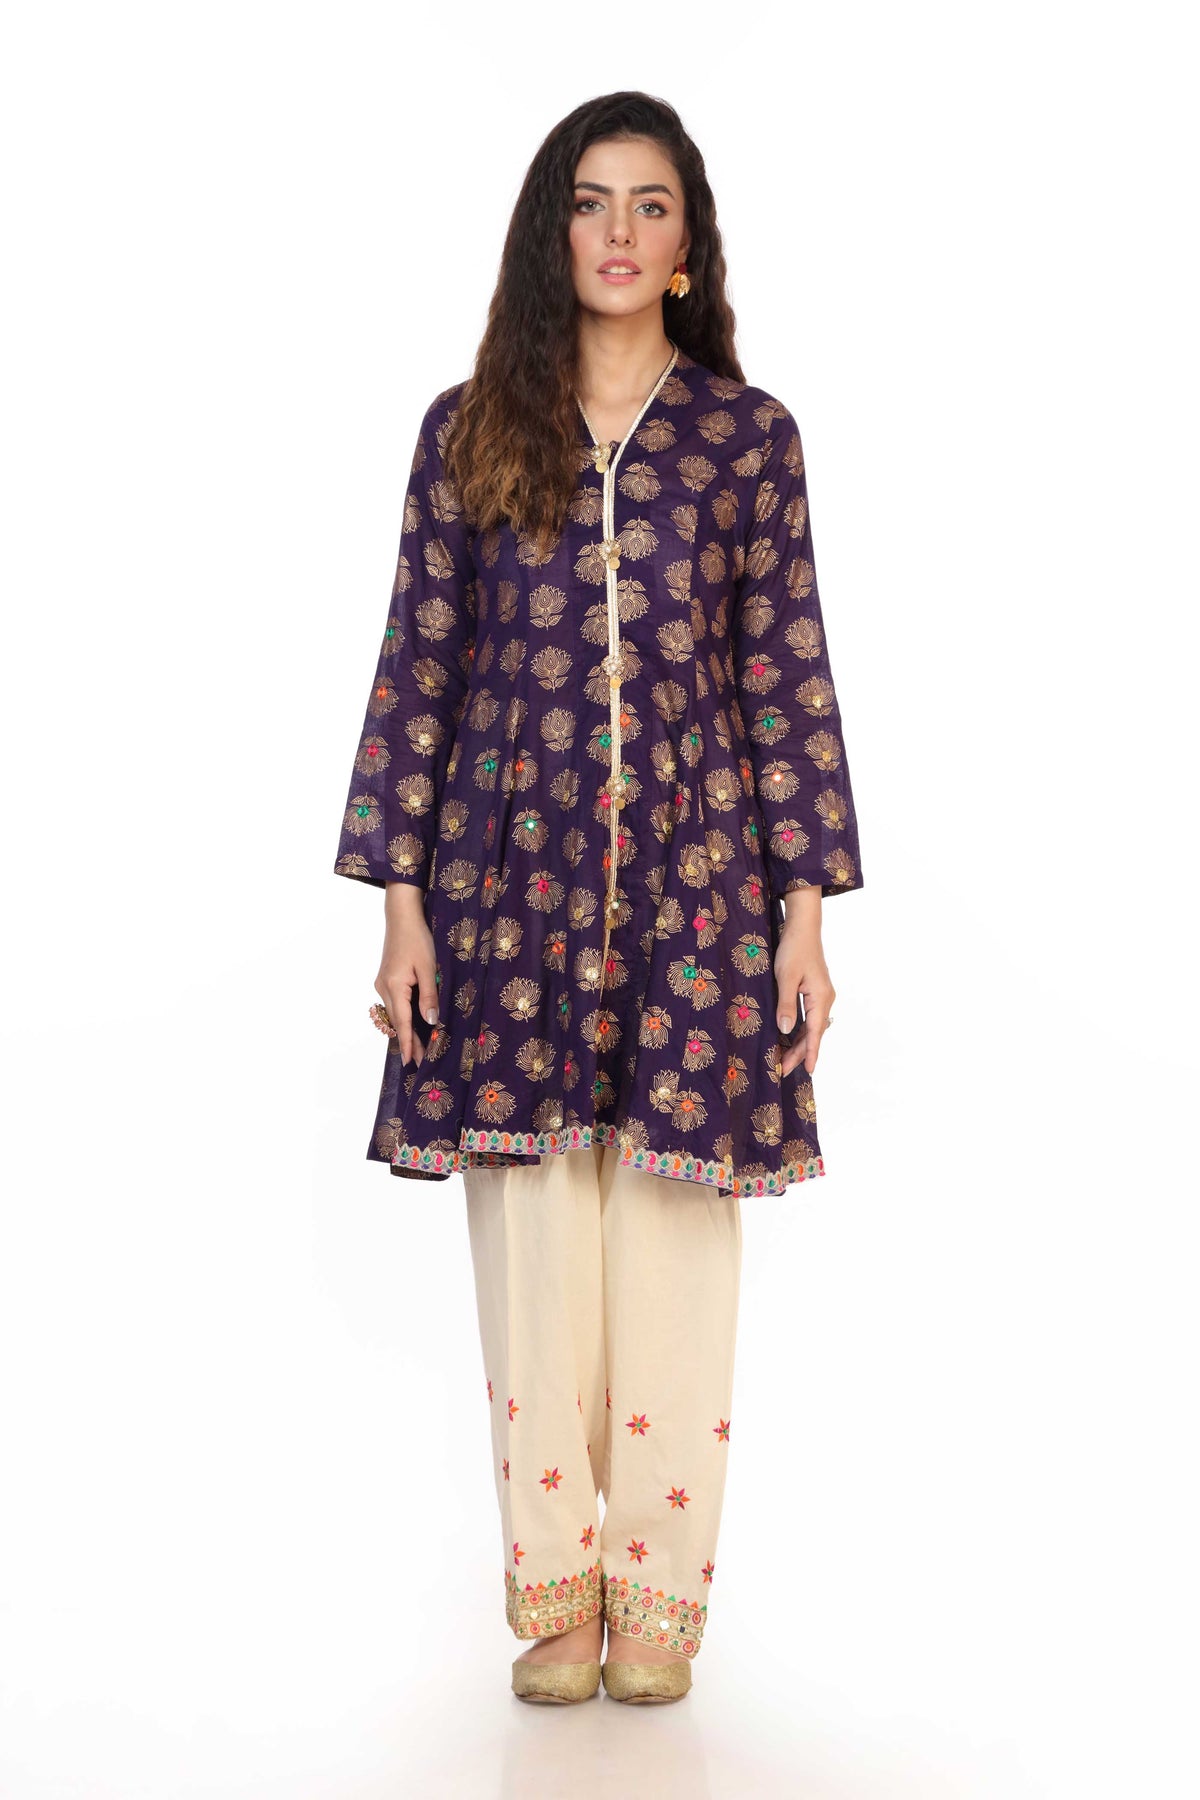 Sheesha Chatta Lt in Purple coloured Printed Lawn fabric